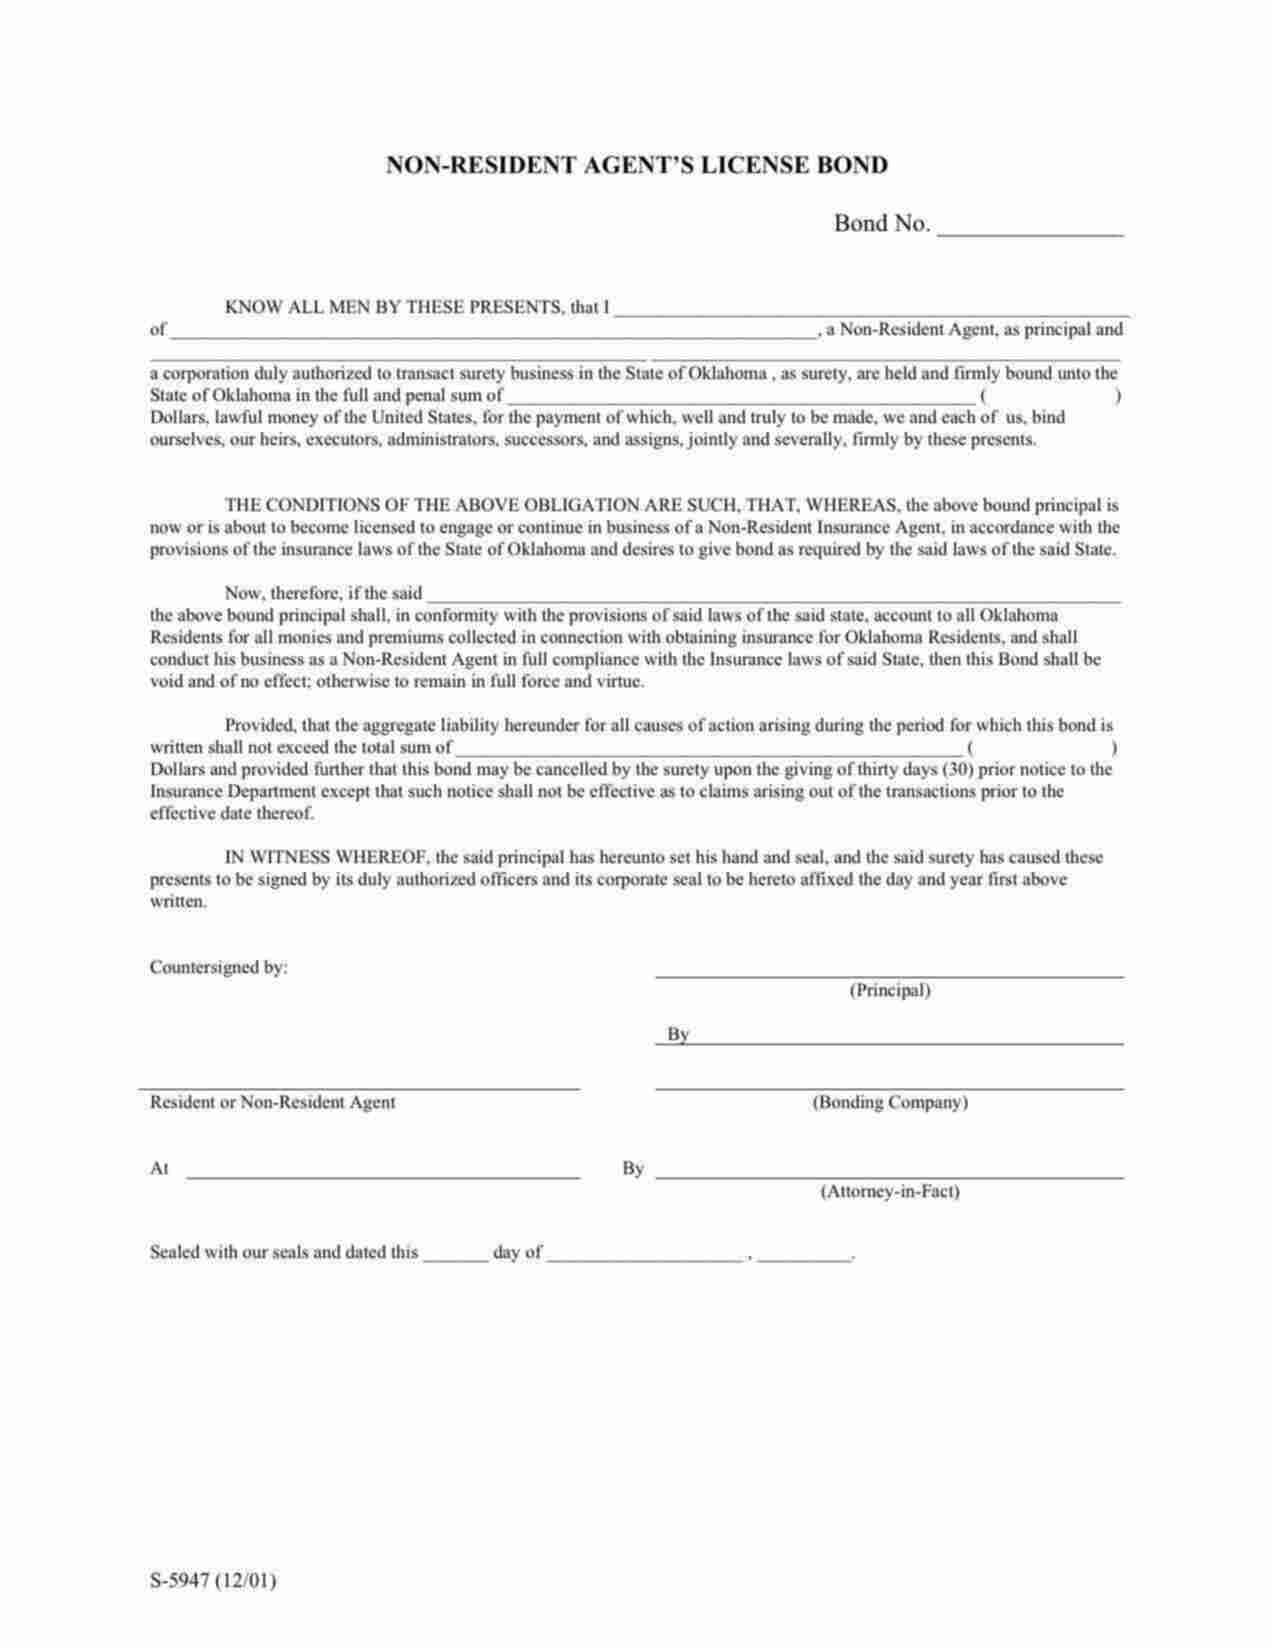 Oklahoma Non-Resident Agent's License Bond Form